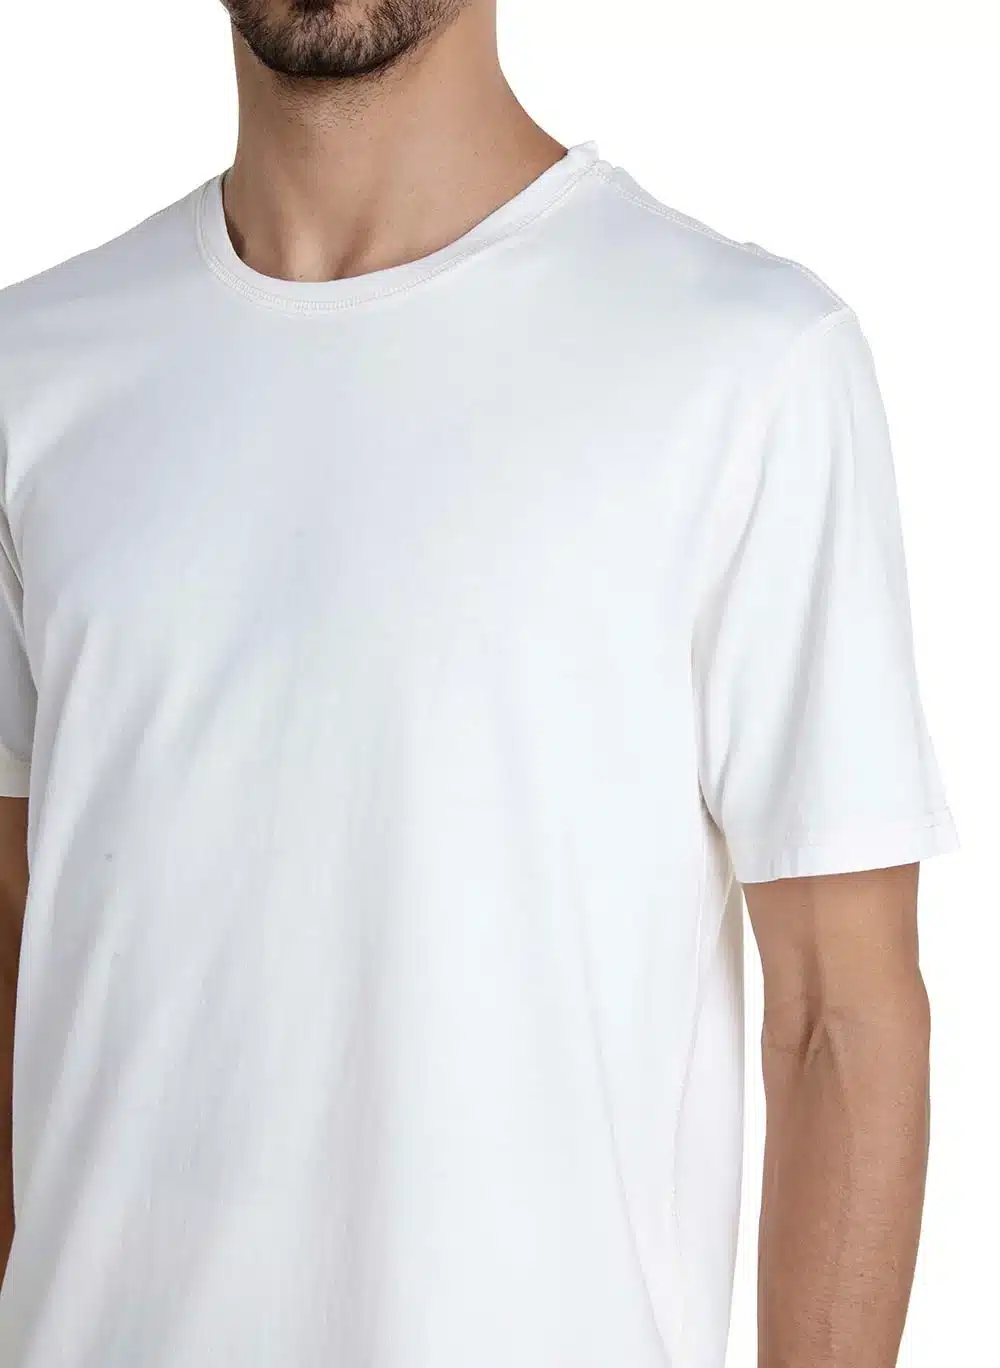 Camiseta Regular Fit Cup John John Masculina - iCat Store